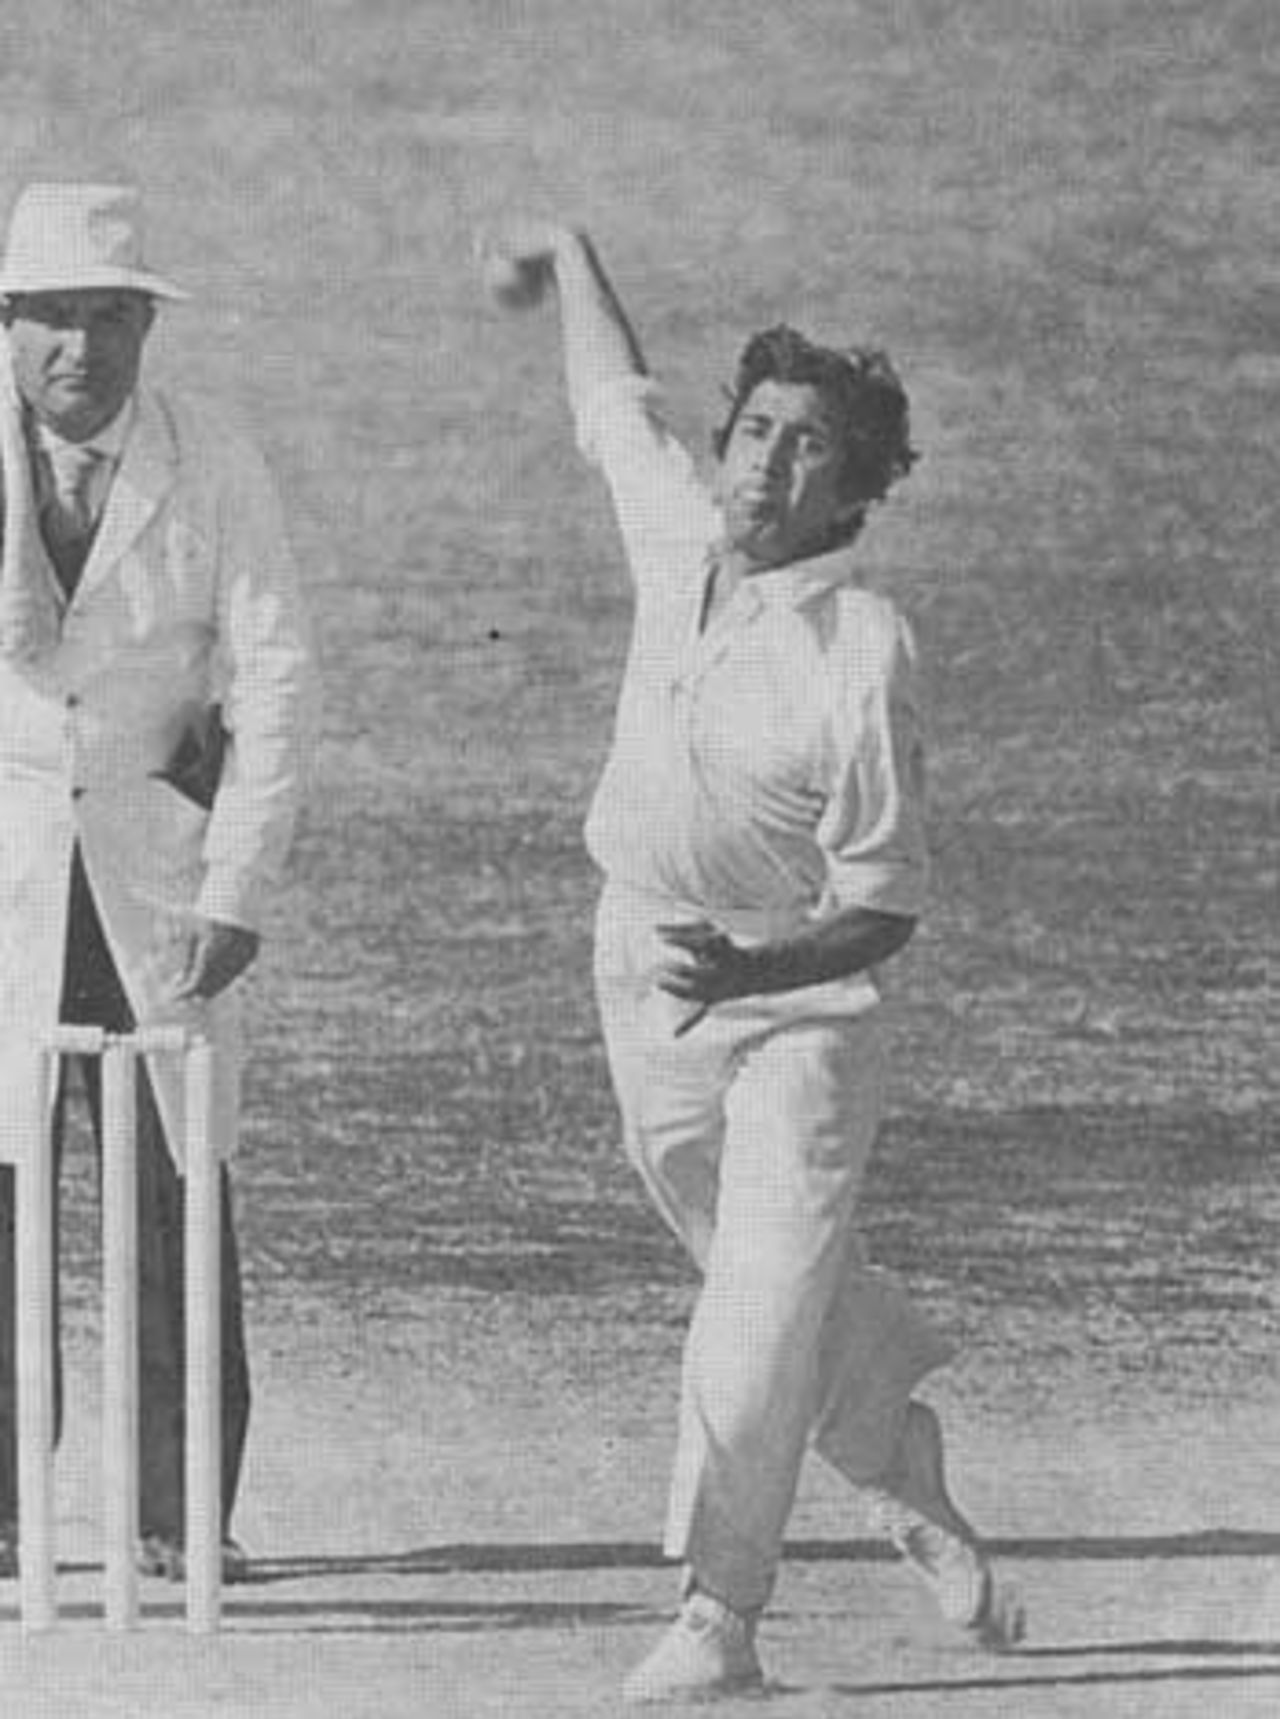 Abdul Qadir bowls during the third Test against England, Pakistan v England, Karachi, January 18, 1978